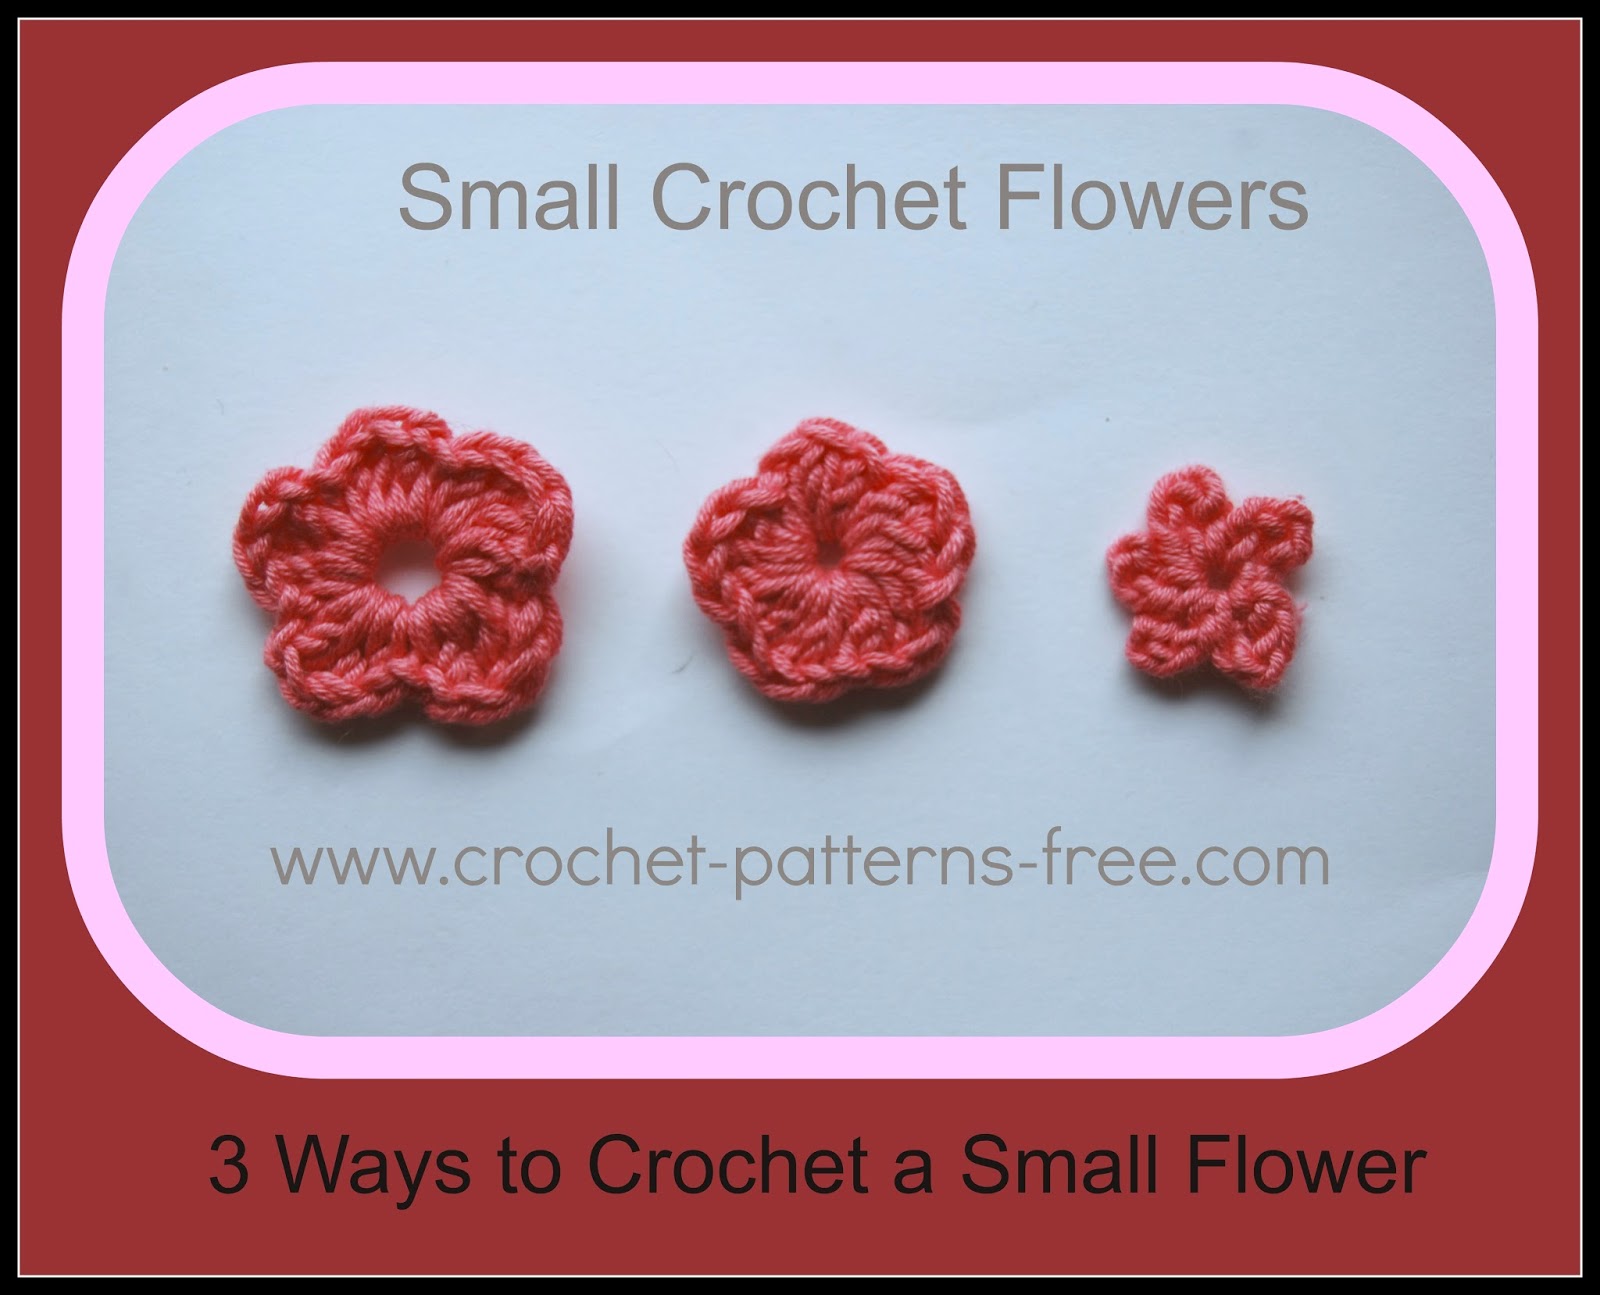 Small Crochet Flower Patterns (Free Crochet Patterns)